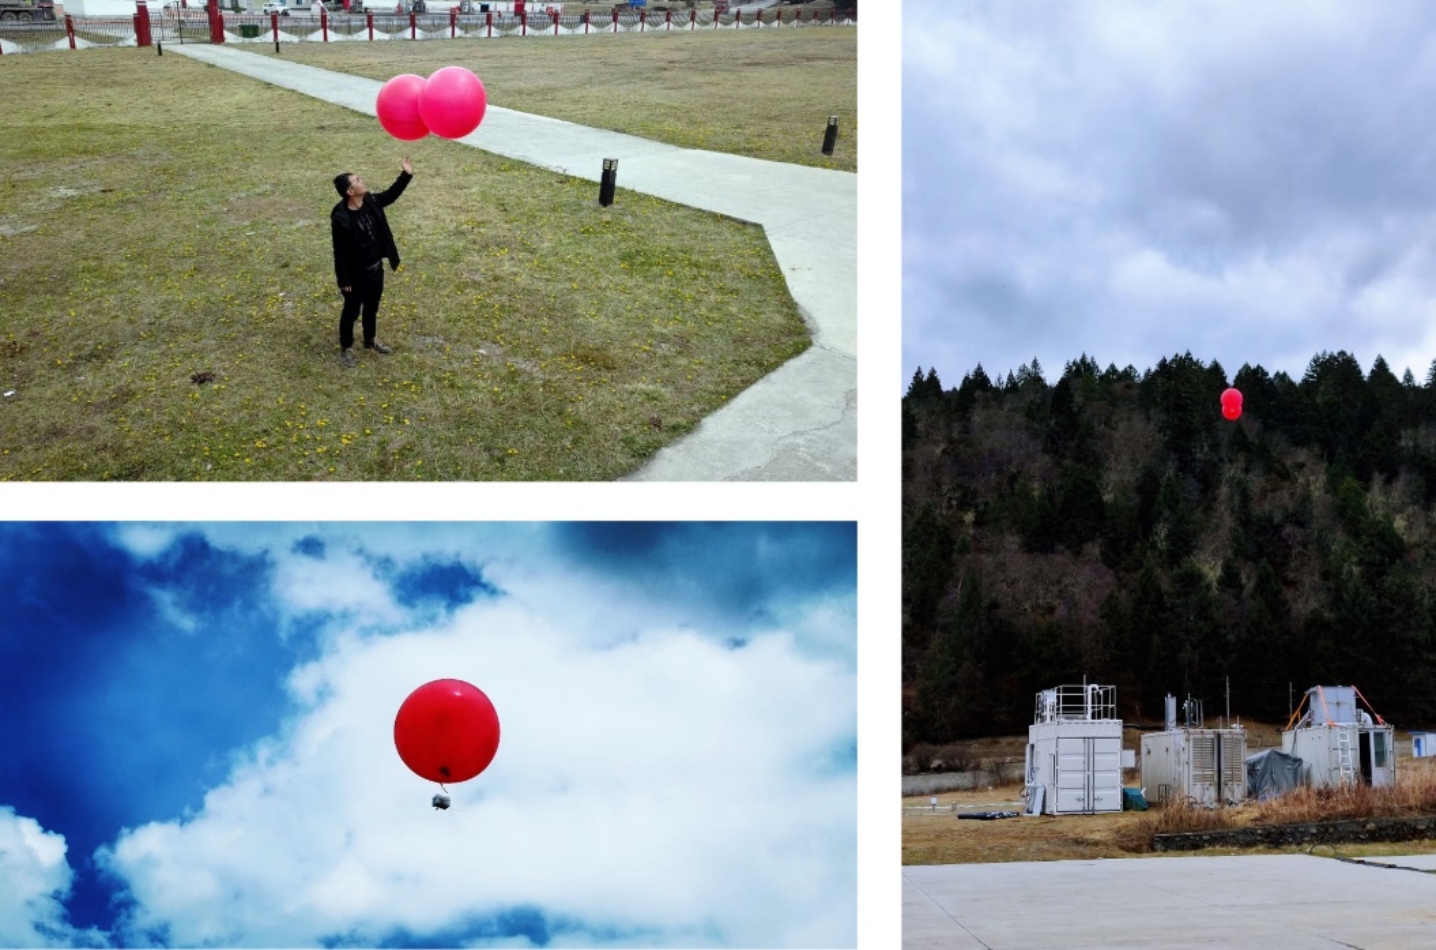 Z:\【工作】\【青藏科考稿子】\通讯稿\原图\施放探空气球及气球升空过程.jpg